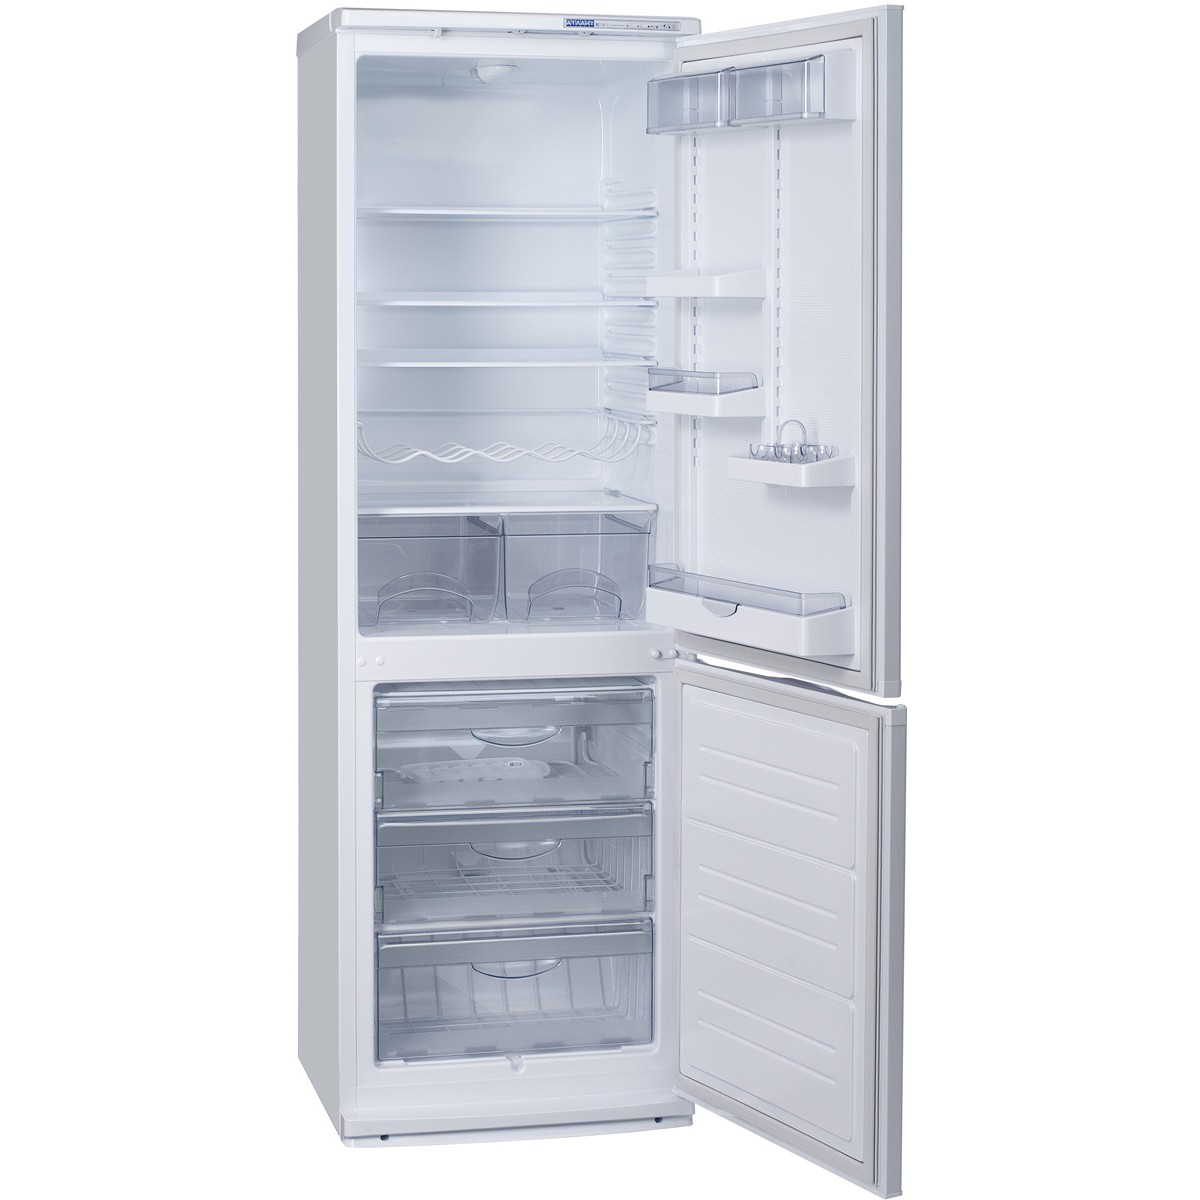 Купить холодильник в ярославле недорого. Холодильник Атлант хм 4010-022. Атлант XM 6021-031. ATLANT хм 6021-031. Атлант хм-6021-031.